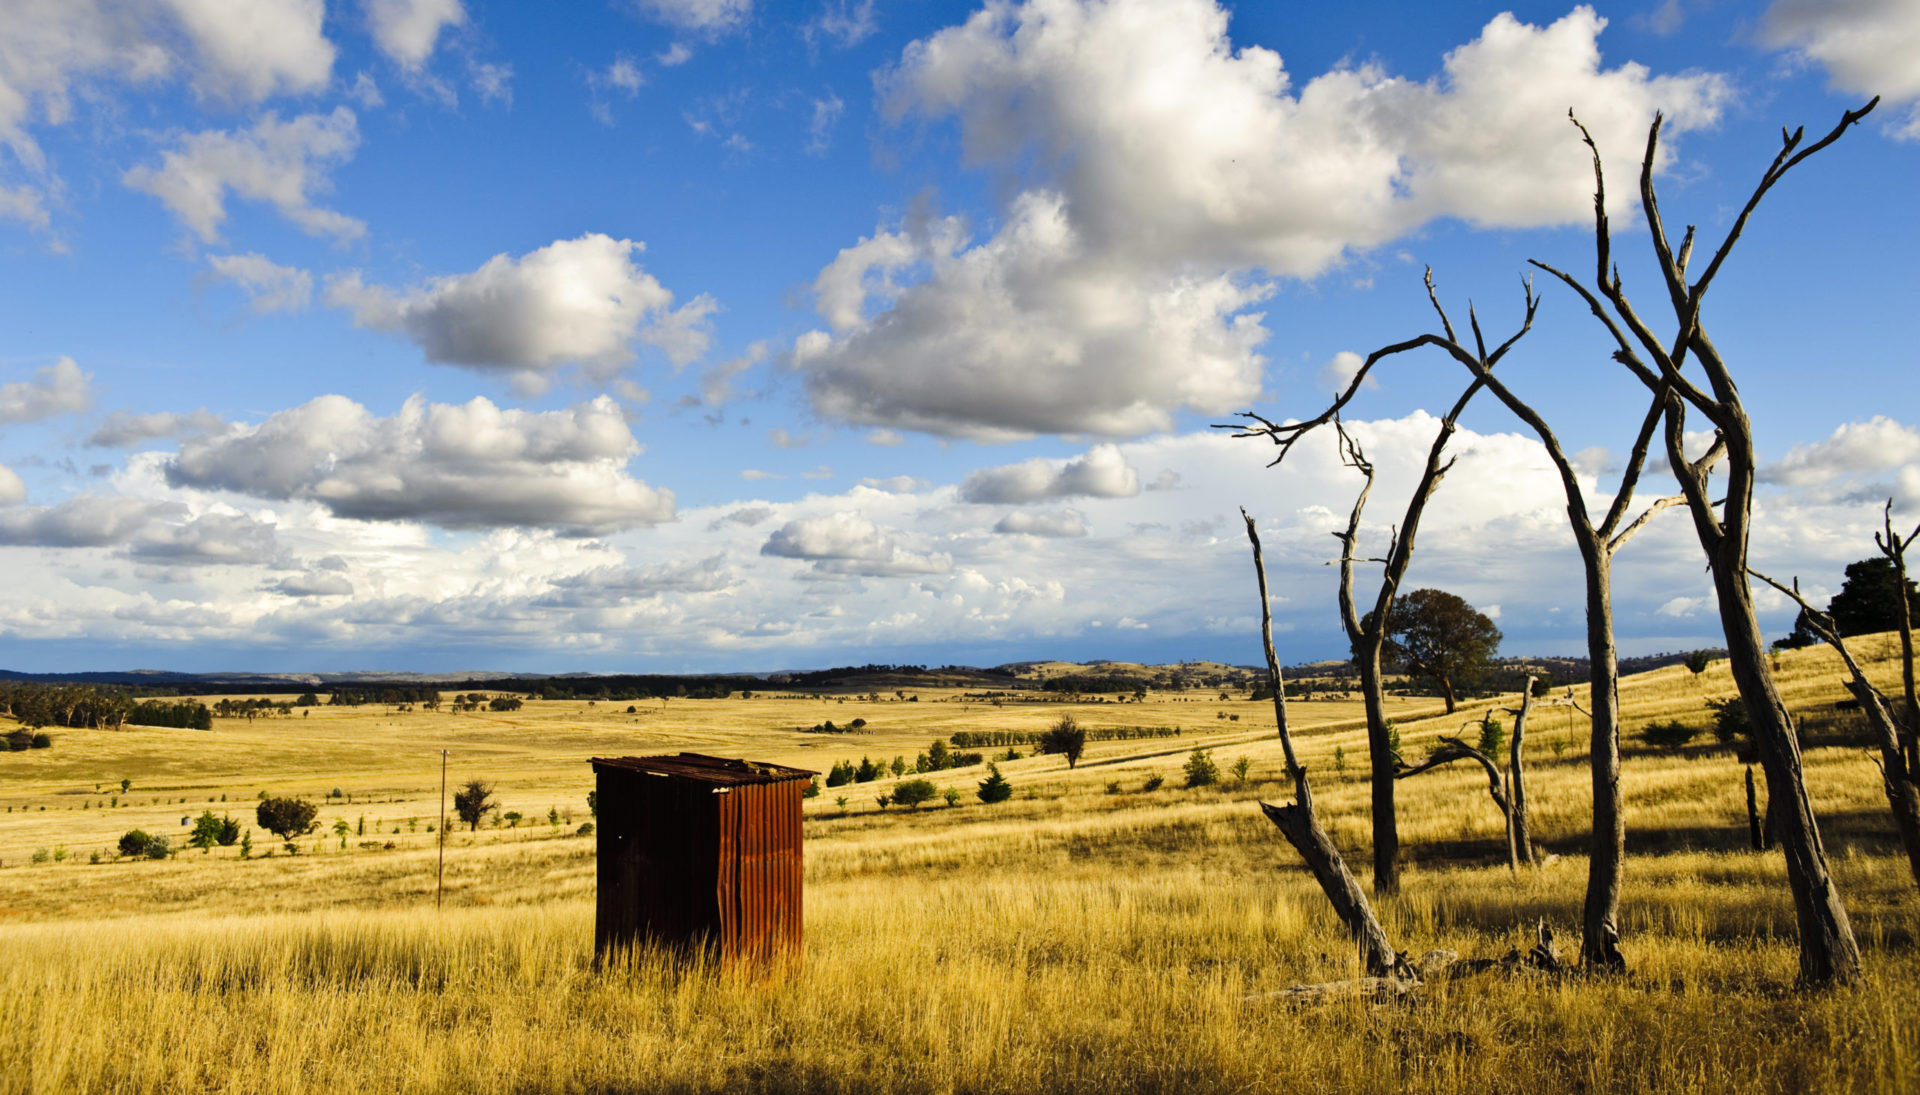 Australia Rusty corrugated iron shed farm outhouse